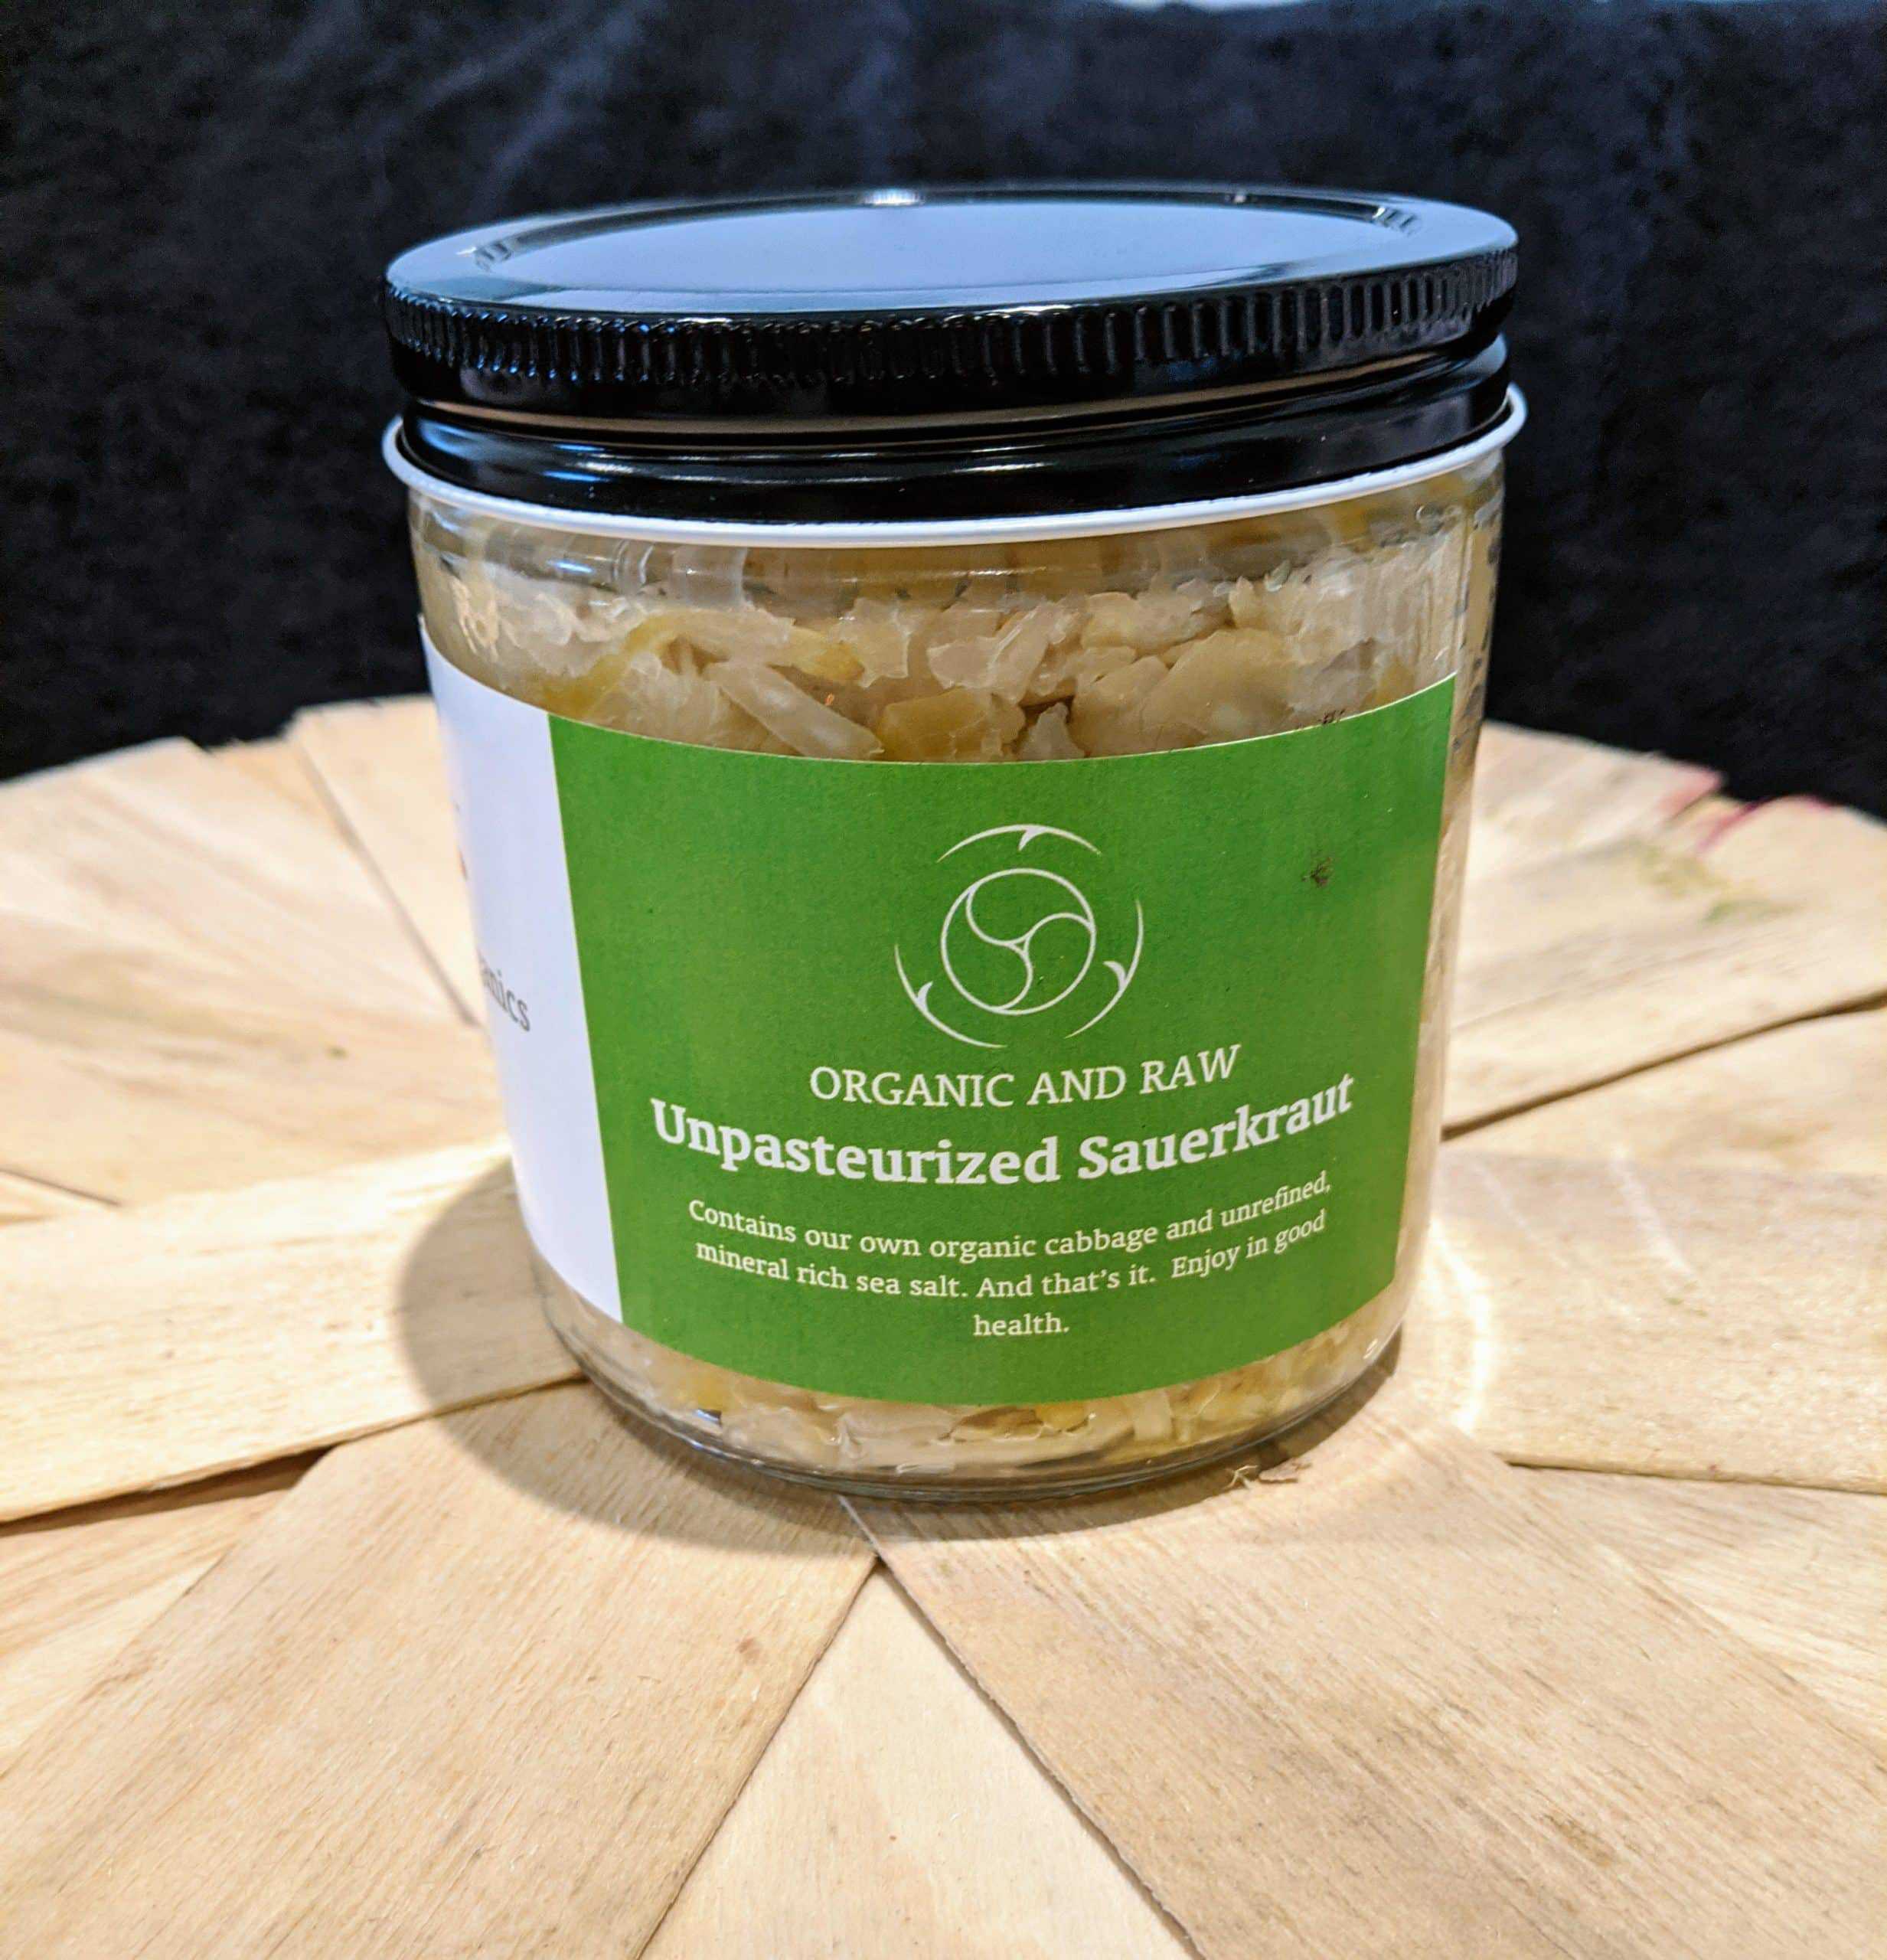 Raw unpasteurized organic sauerkraut!